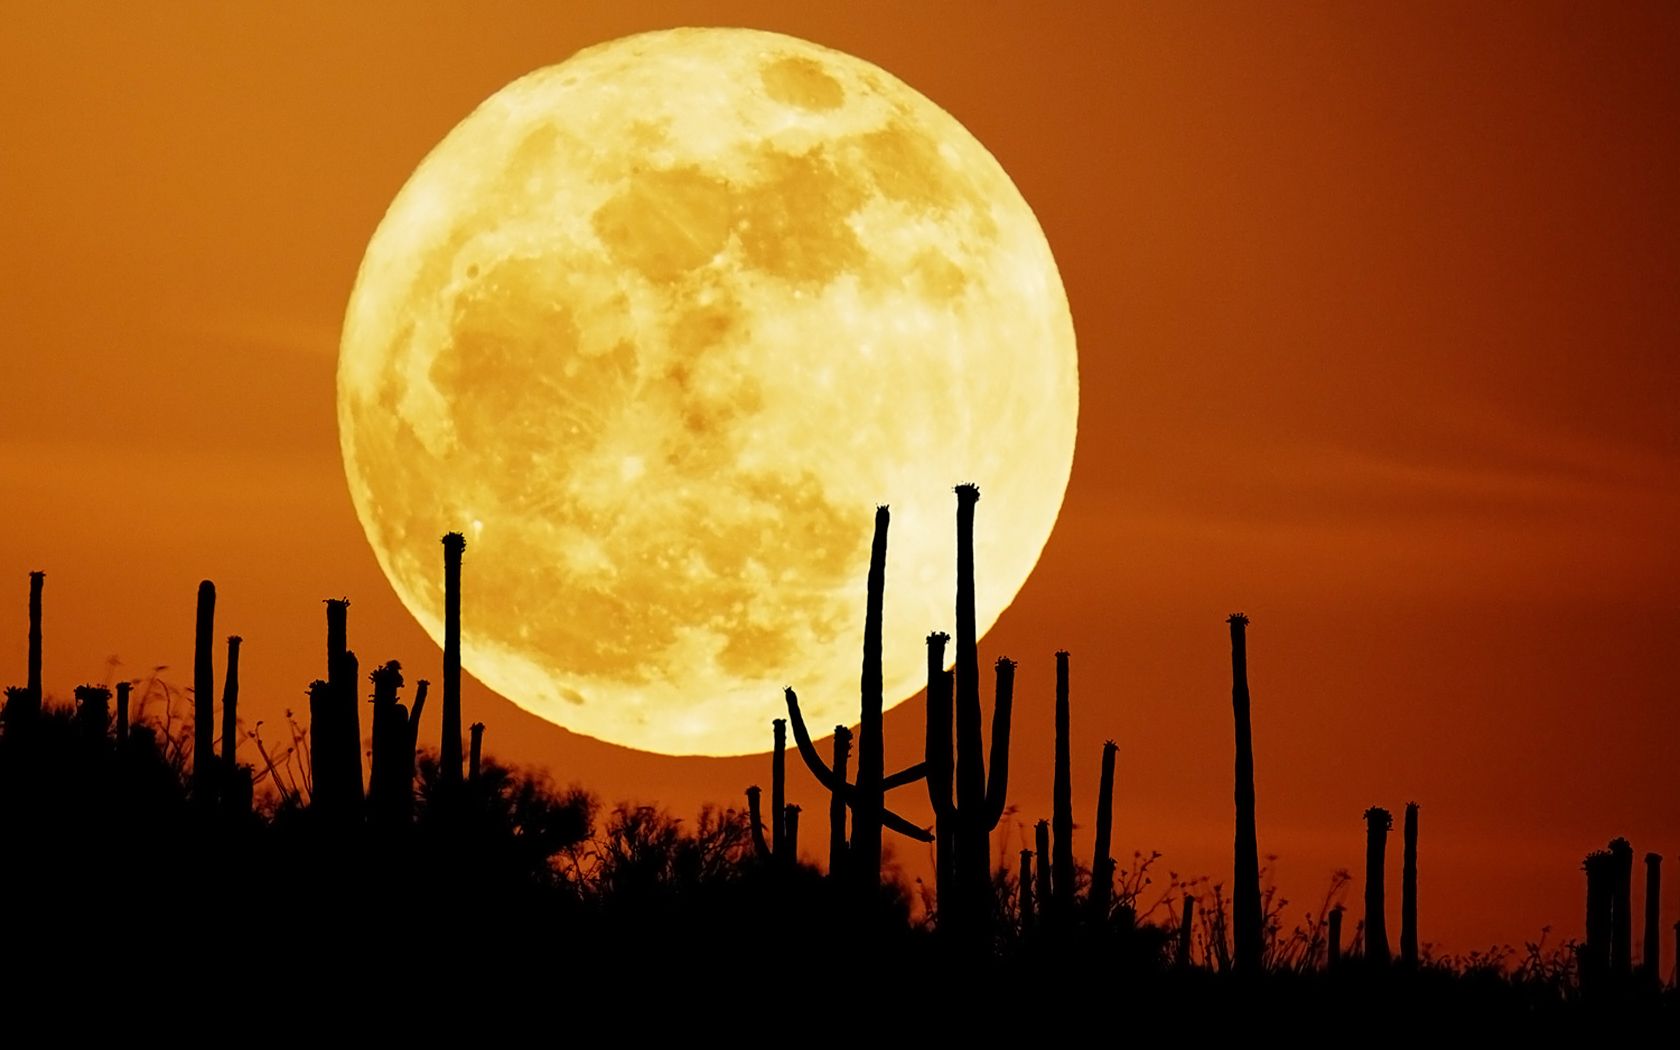 Download wallpaper: orange Sky and moon, download photo, moon